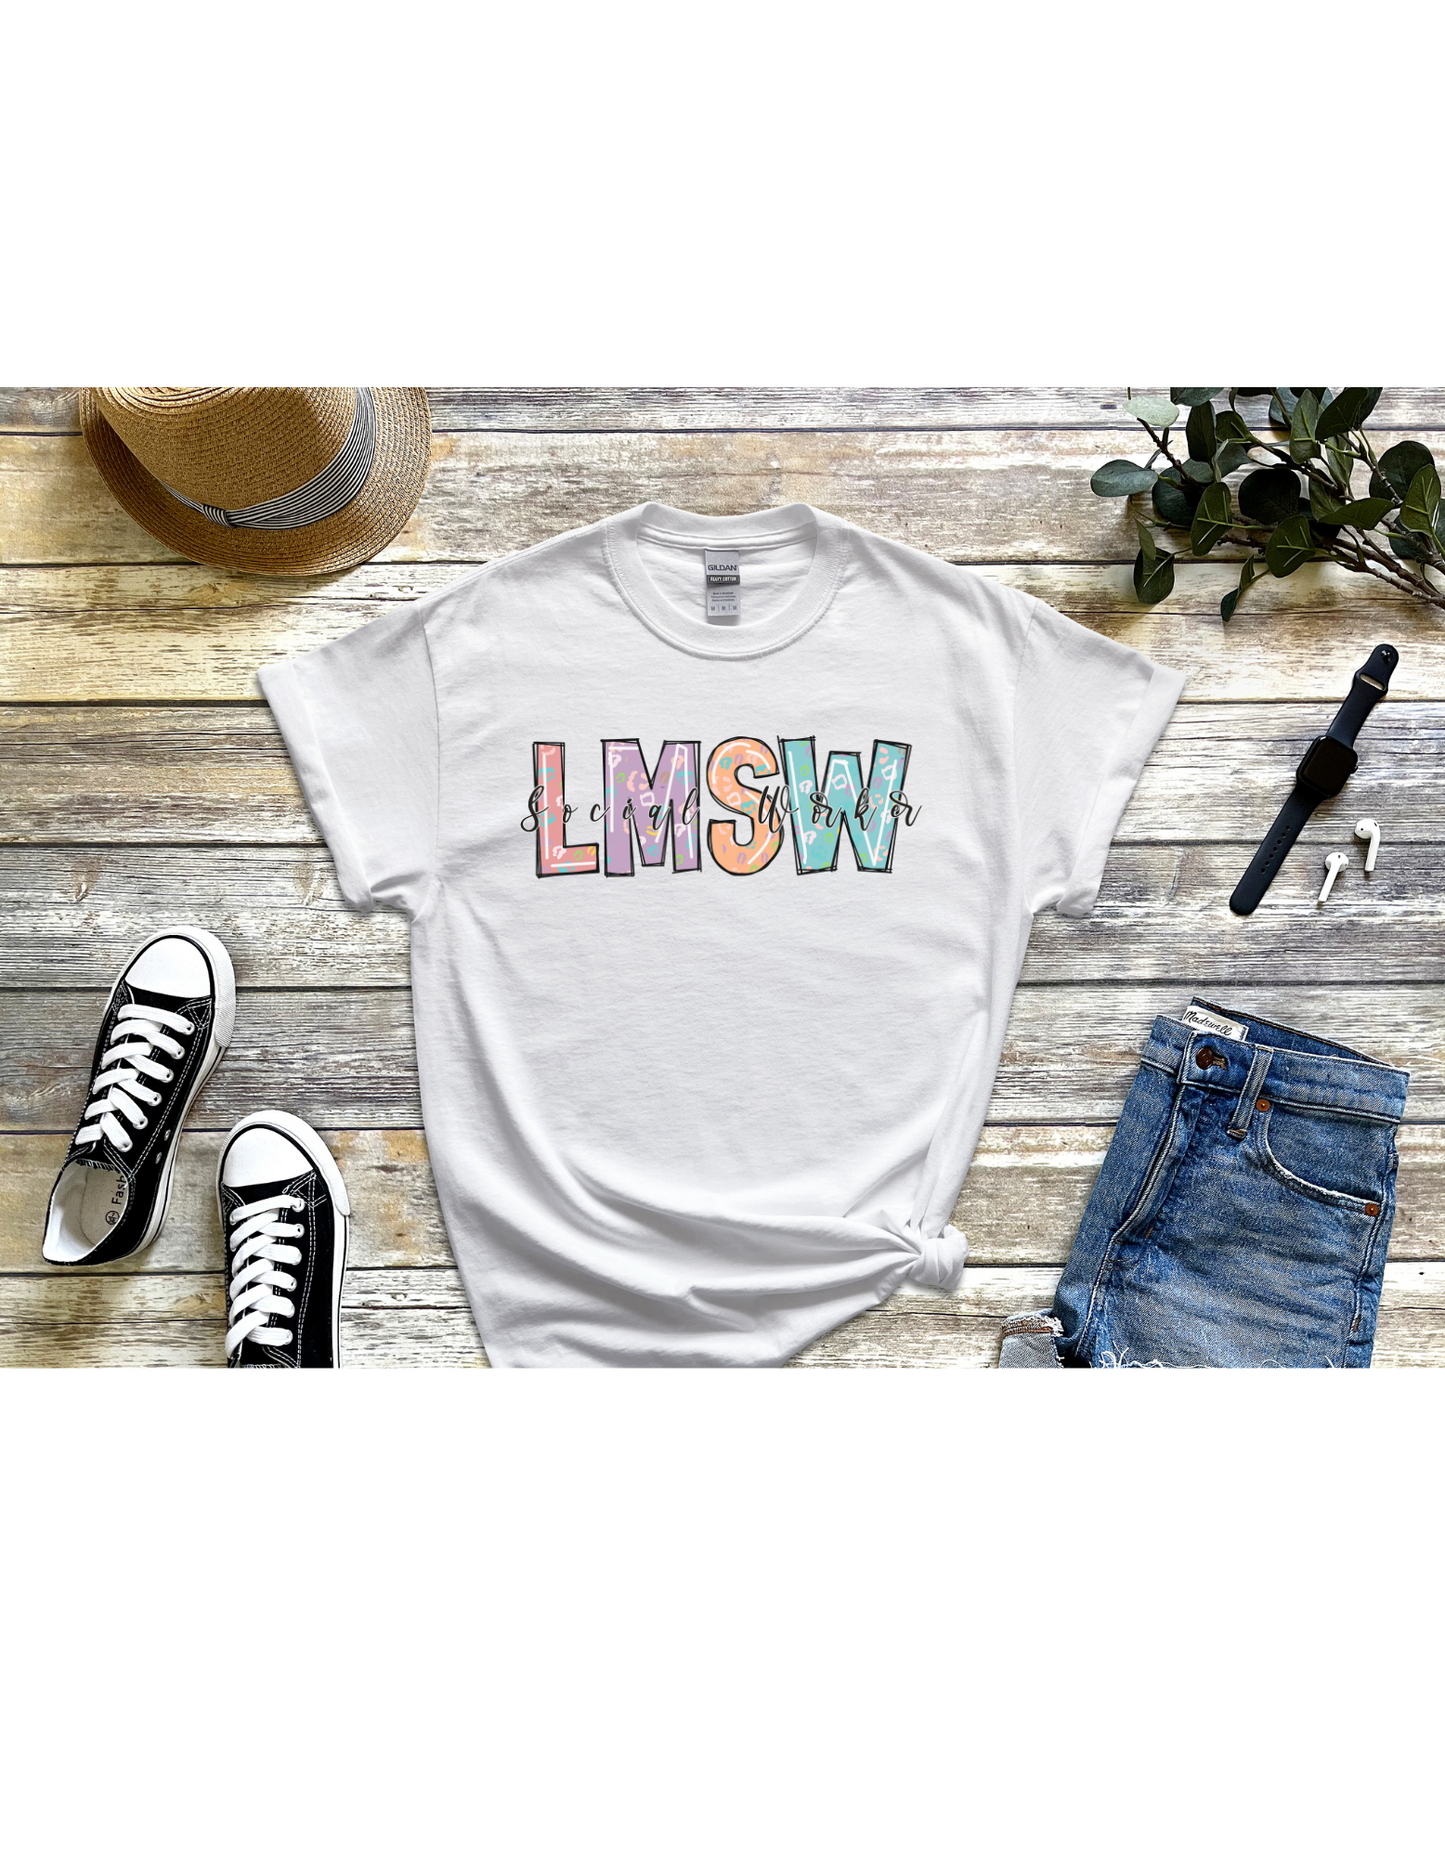 LMSW Licensed Master Social Worker T-Shirt, Social Work Gift, LMSW Shirt, LCSW Shirt, Advocate Shirt